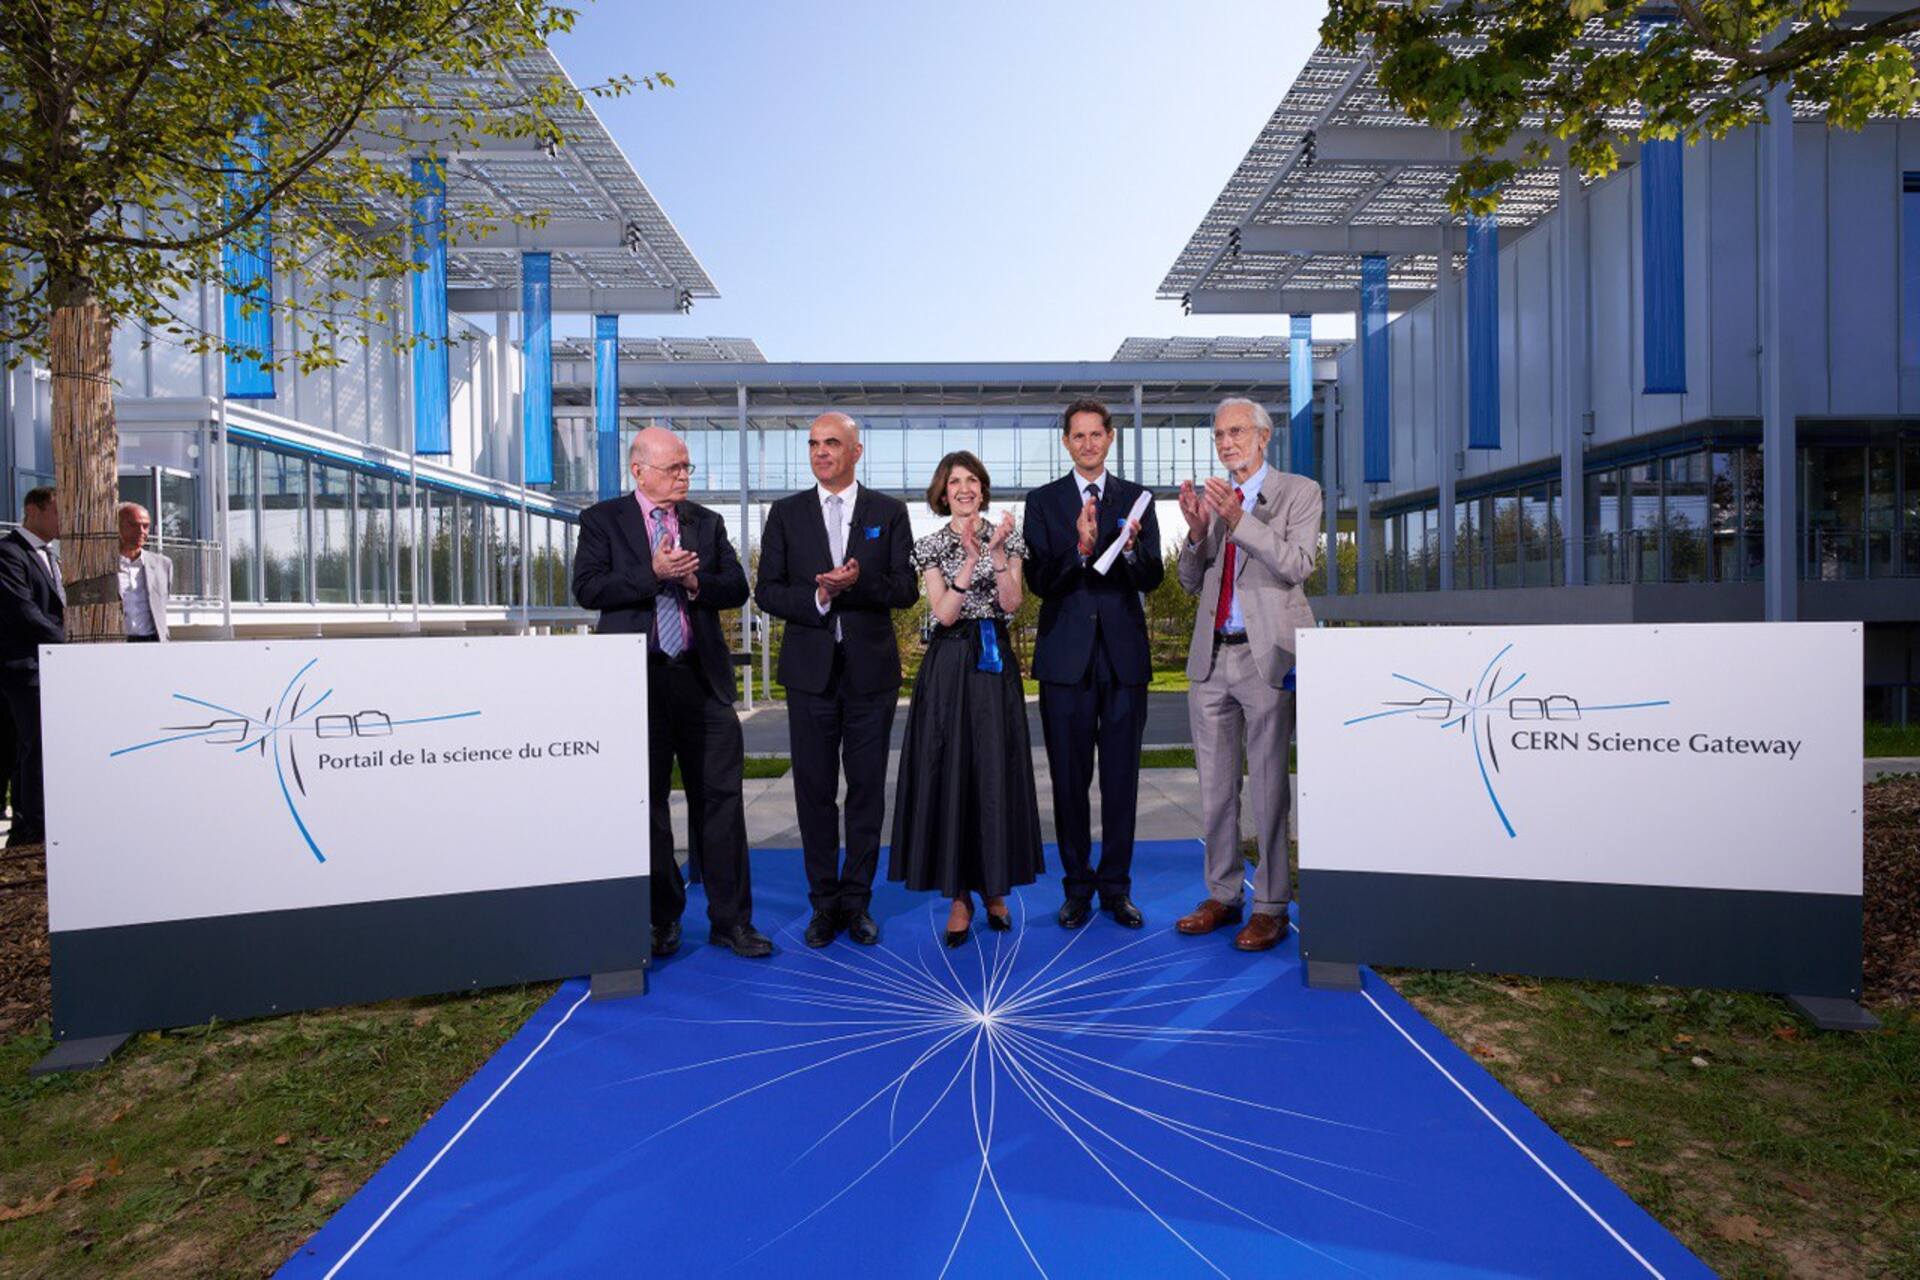 CERN 科学网关：Eliezer Rabinovici、Alain Berset、Fabiola Gianotti、John Ekann 和 Renzo Piano